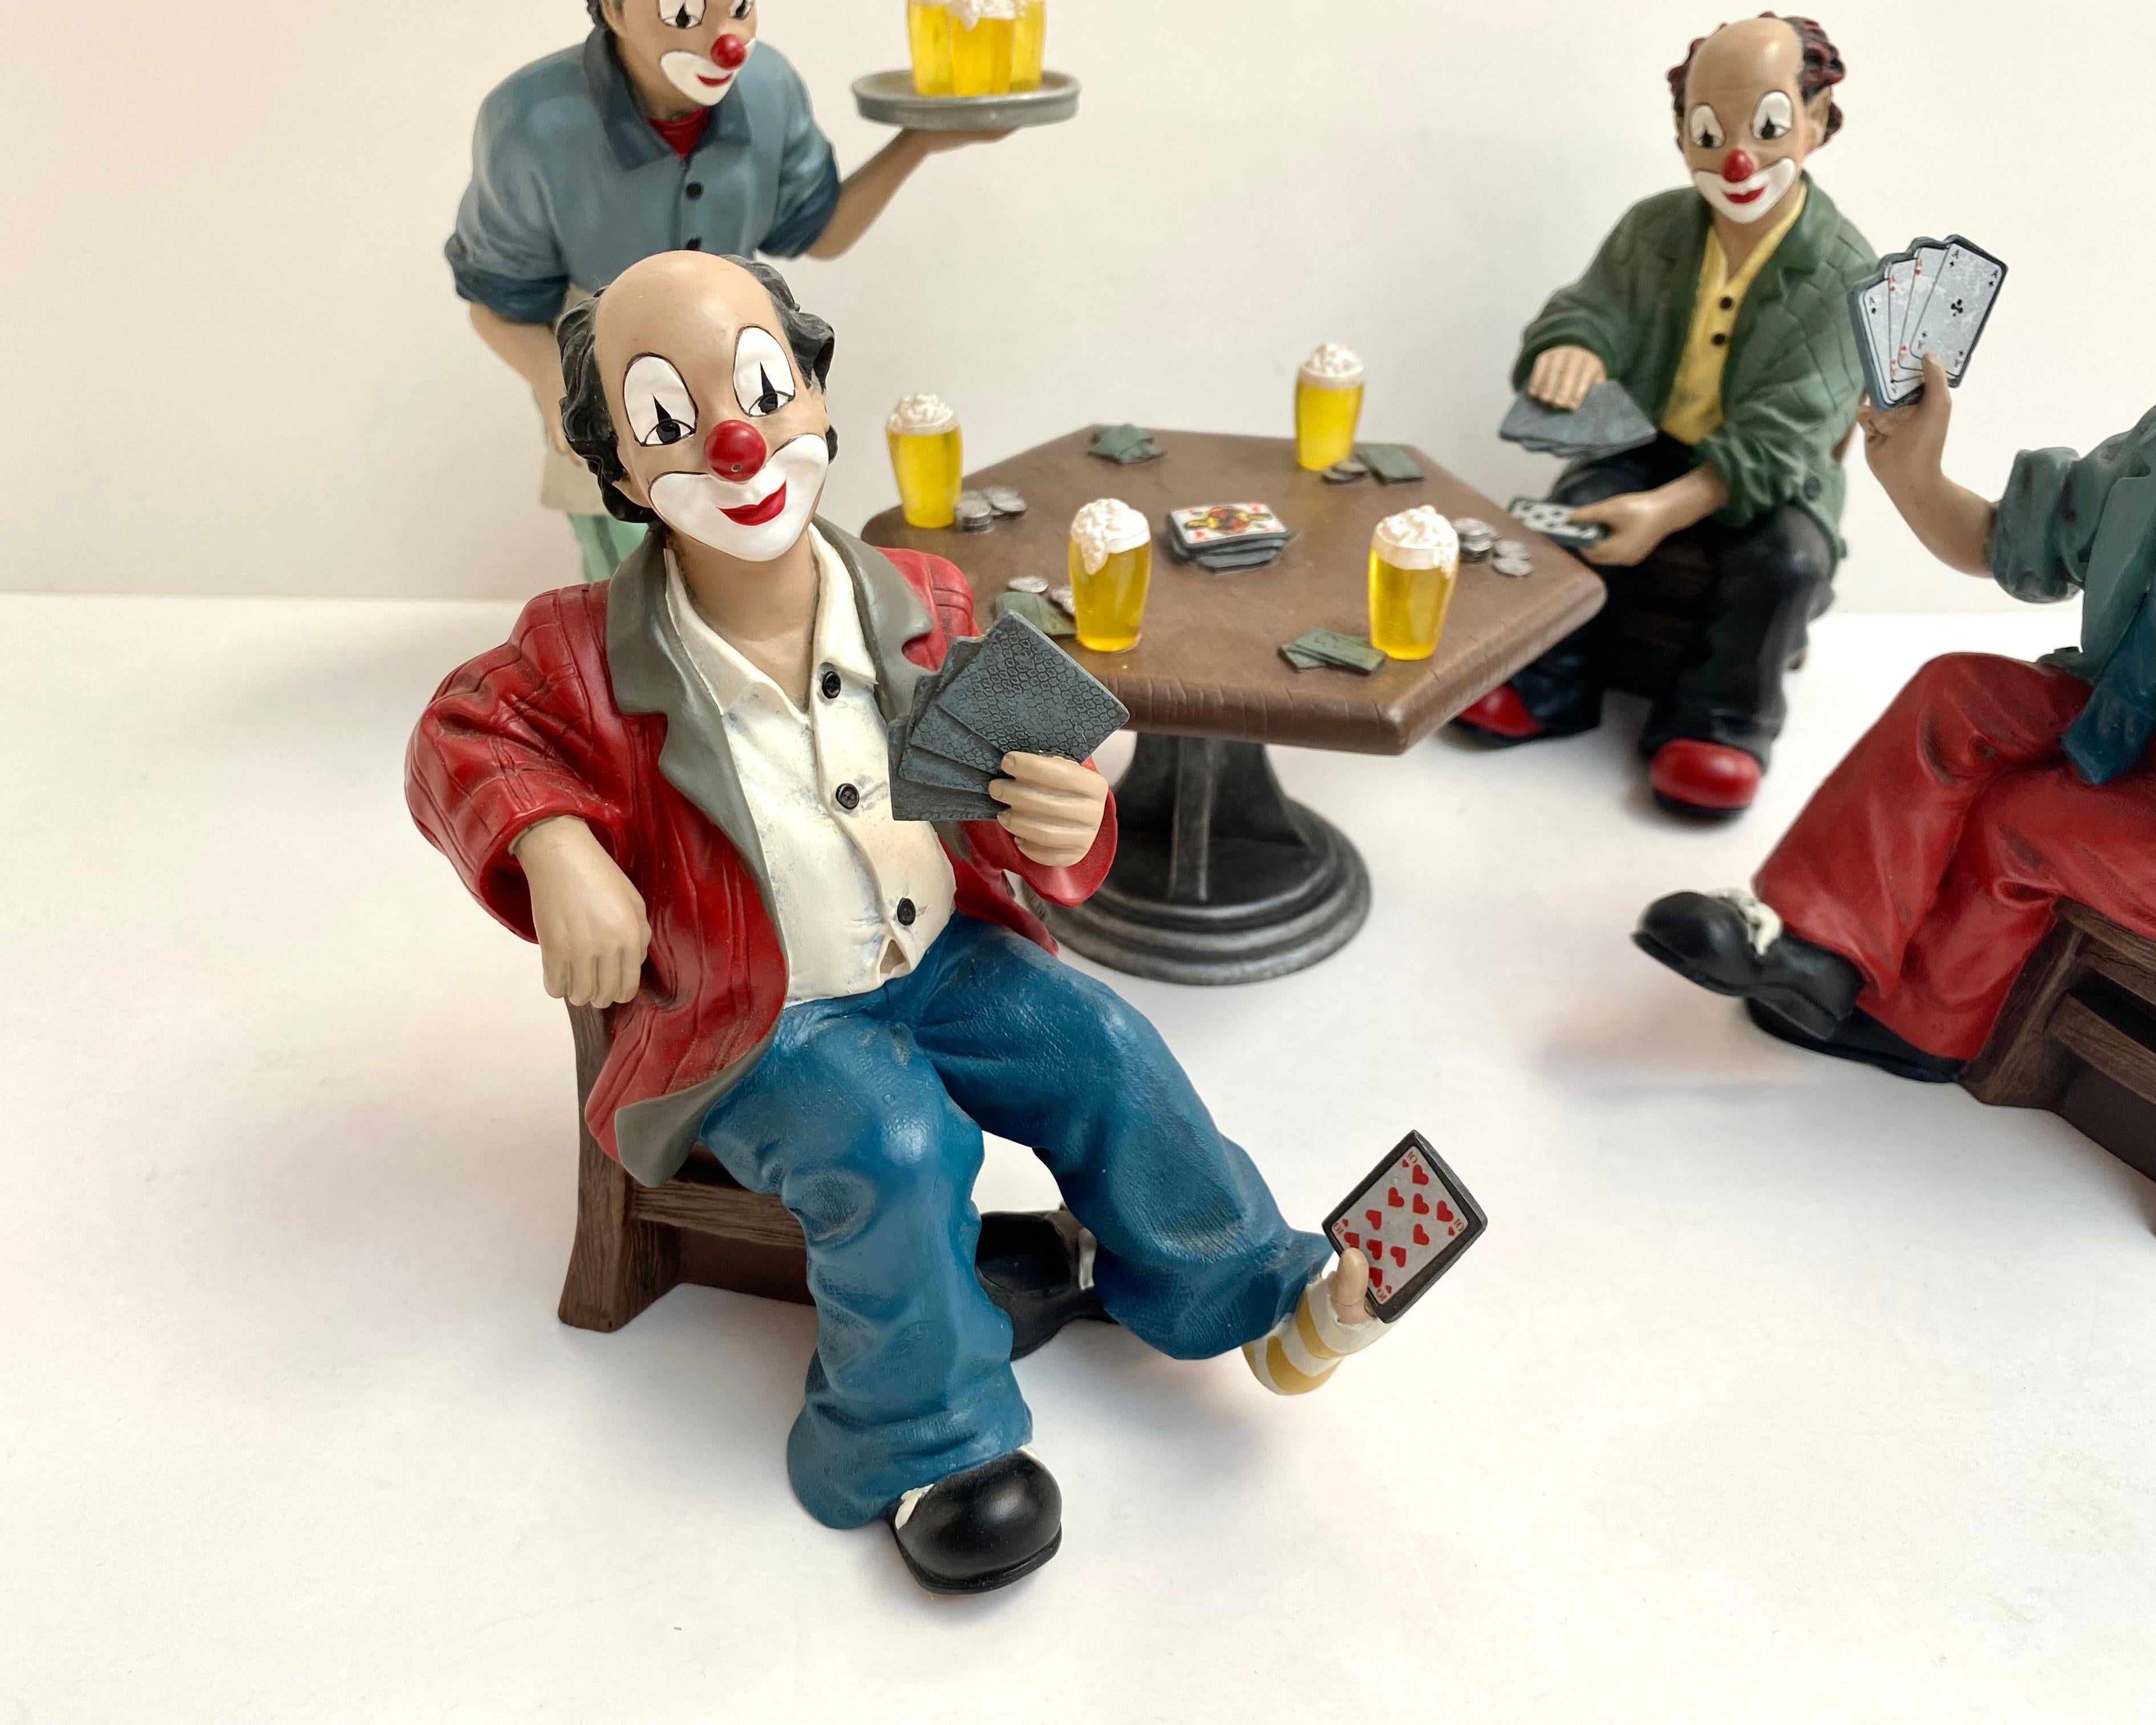 clowns around a table